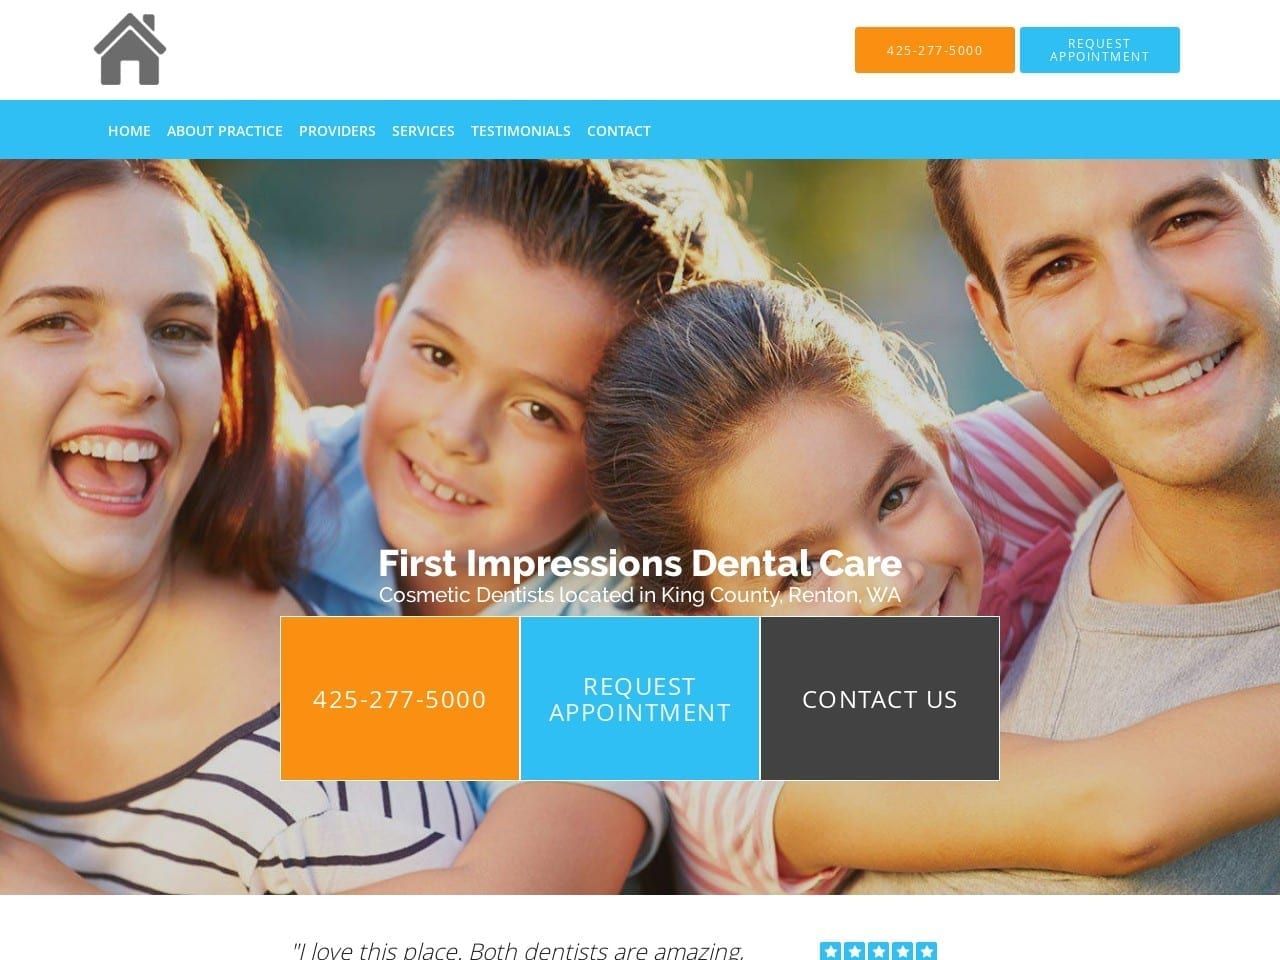 First Impressions Dental Care Website Screenshot from rentonsmiles.com